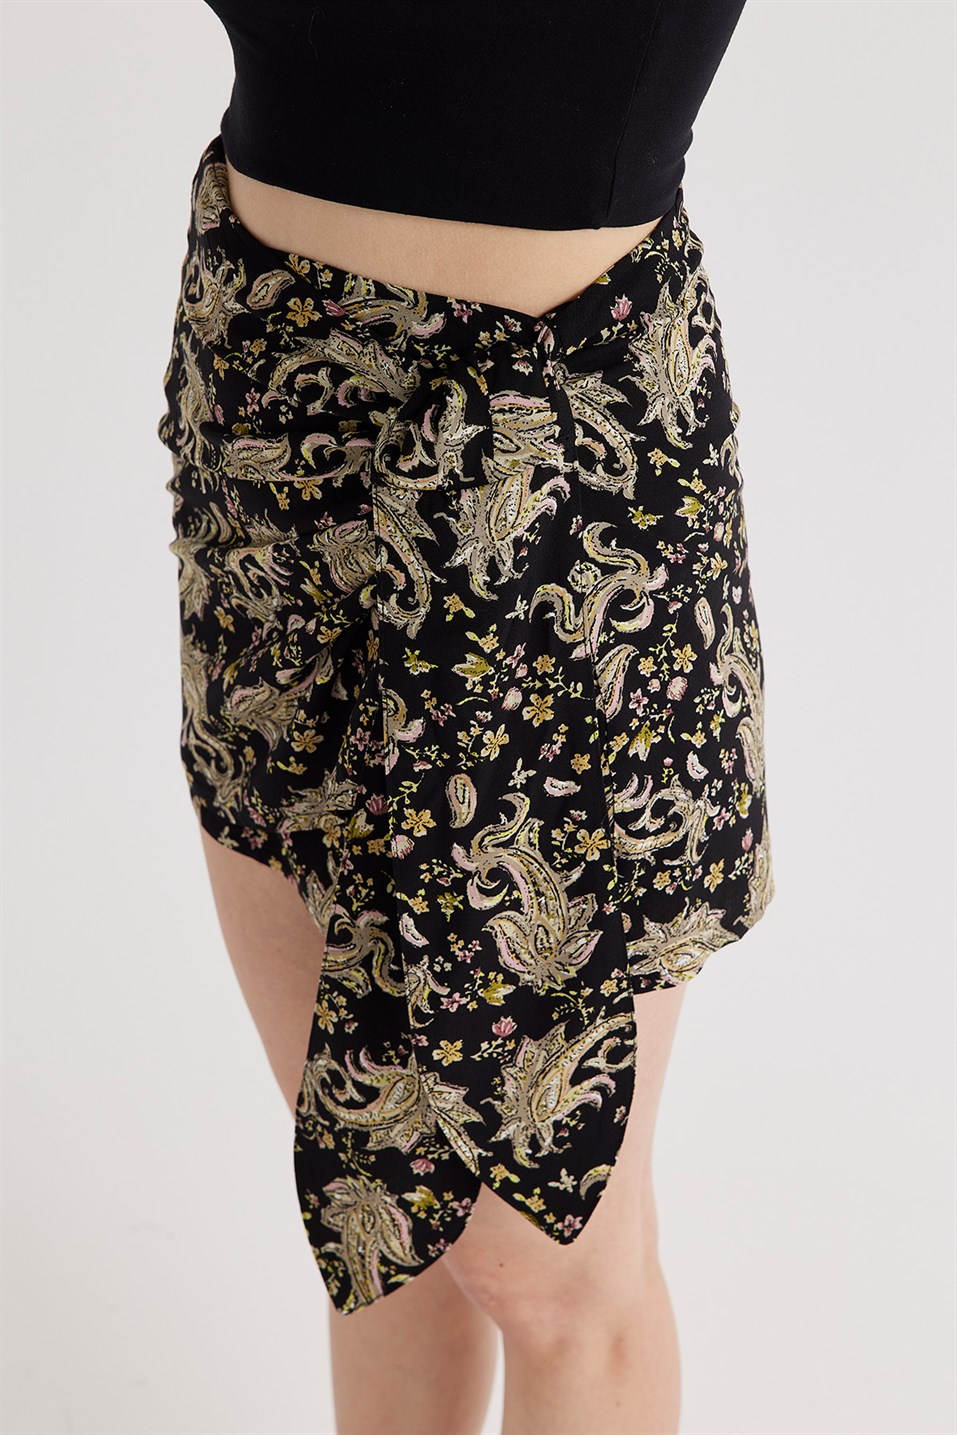 Black Paisley Patterned Pareo Skirt